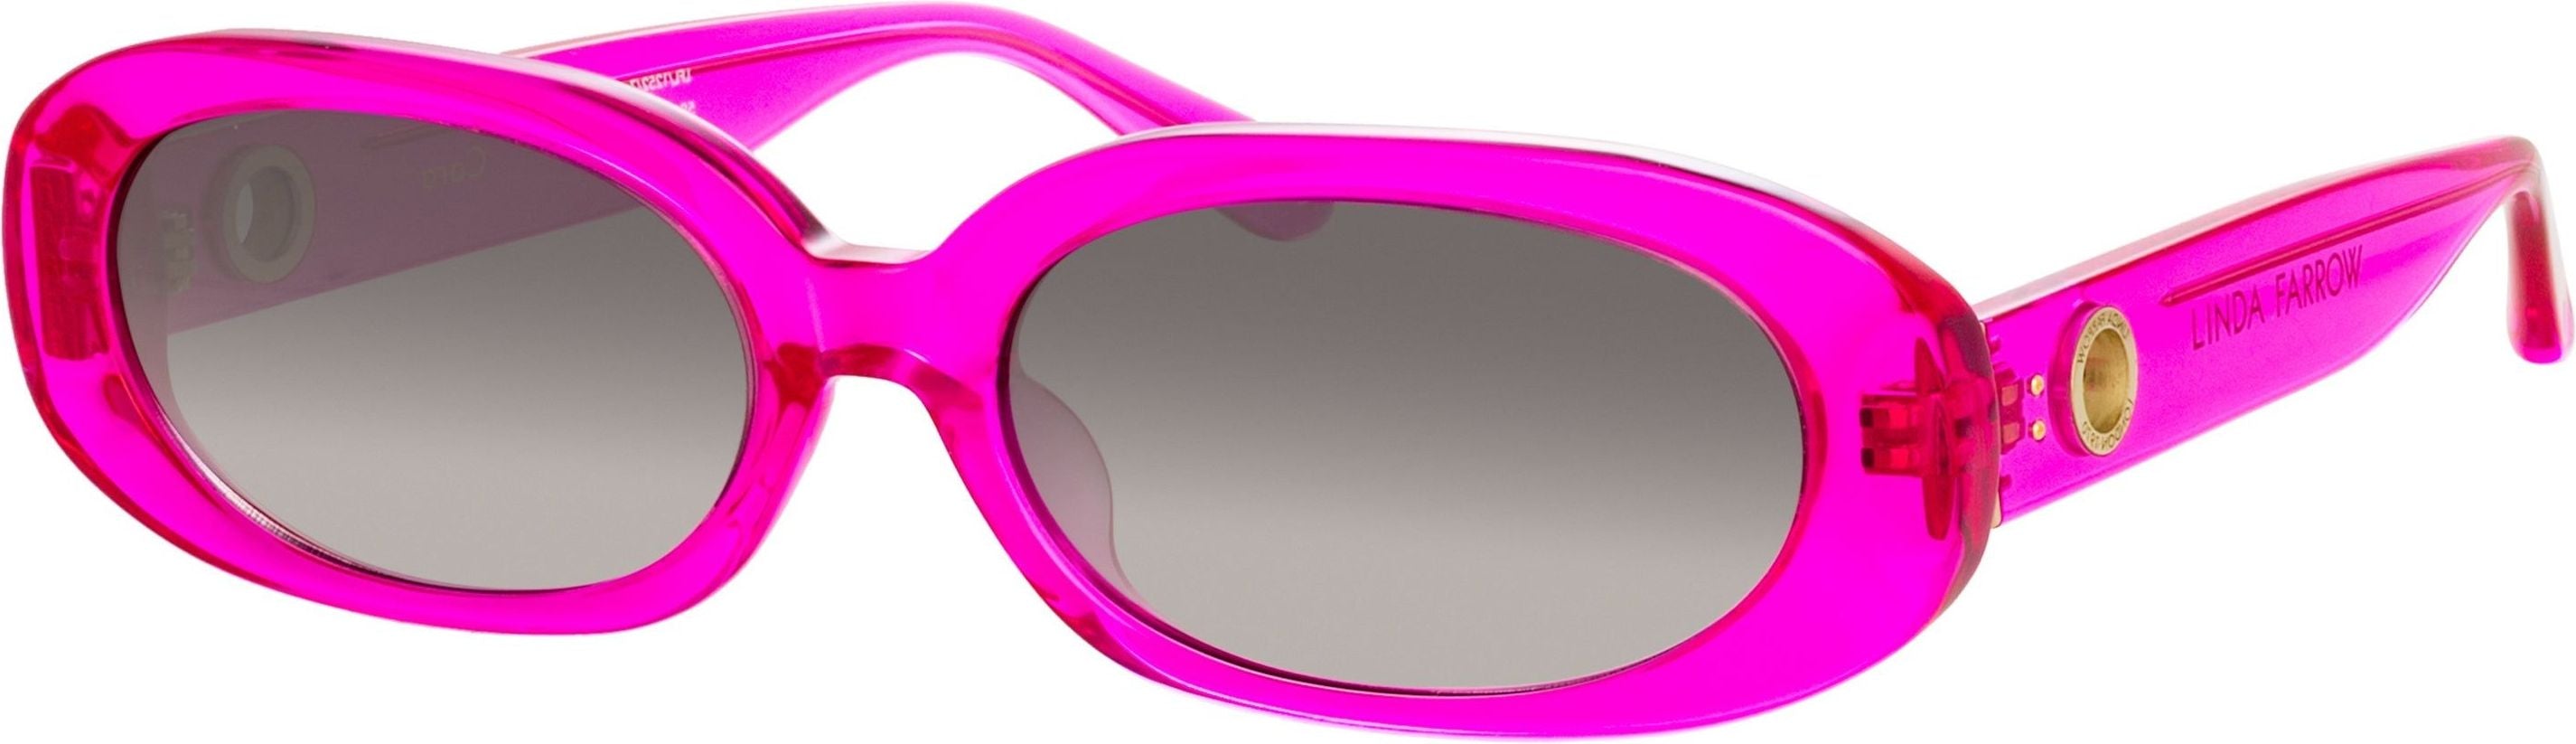 Color_LFL1252C7SUN - Cara Oval Sunglasses in Fuchsia